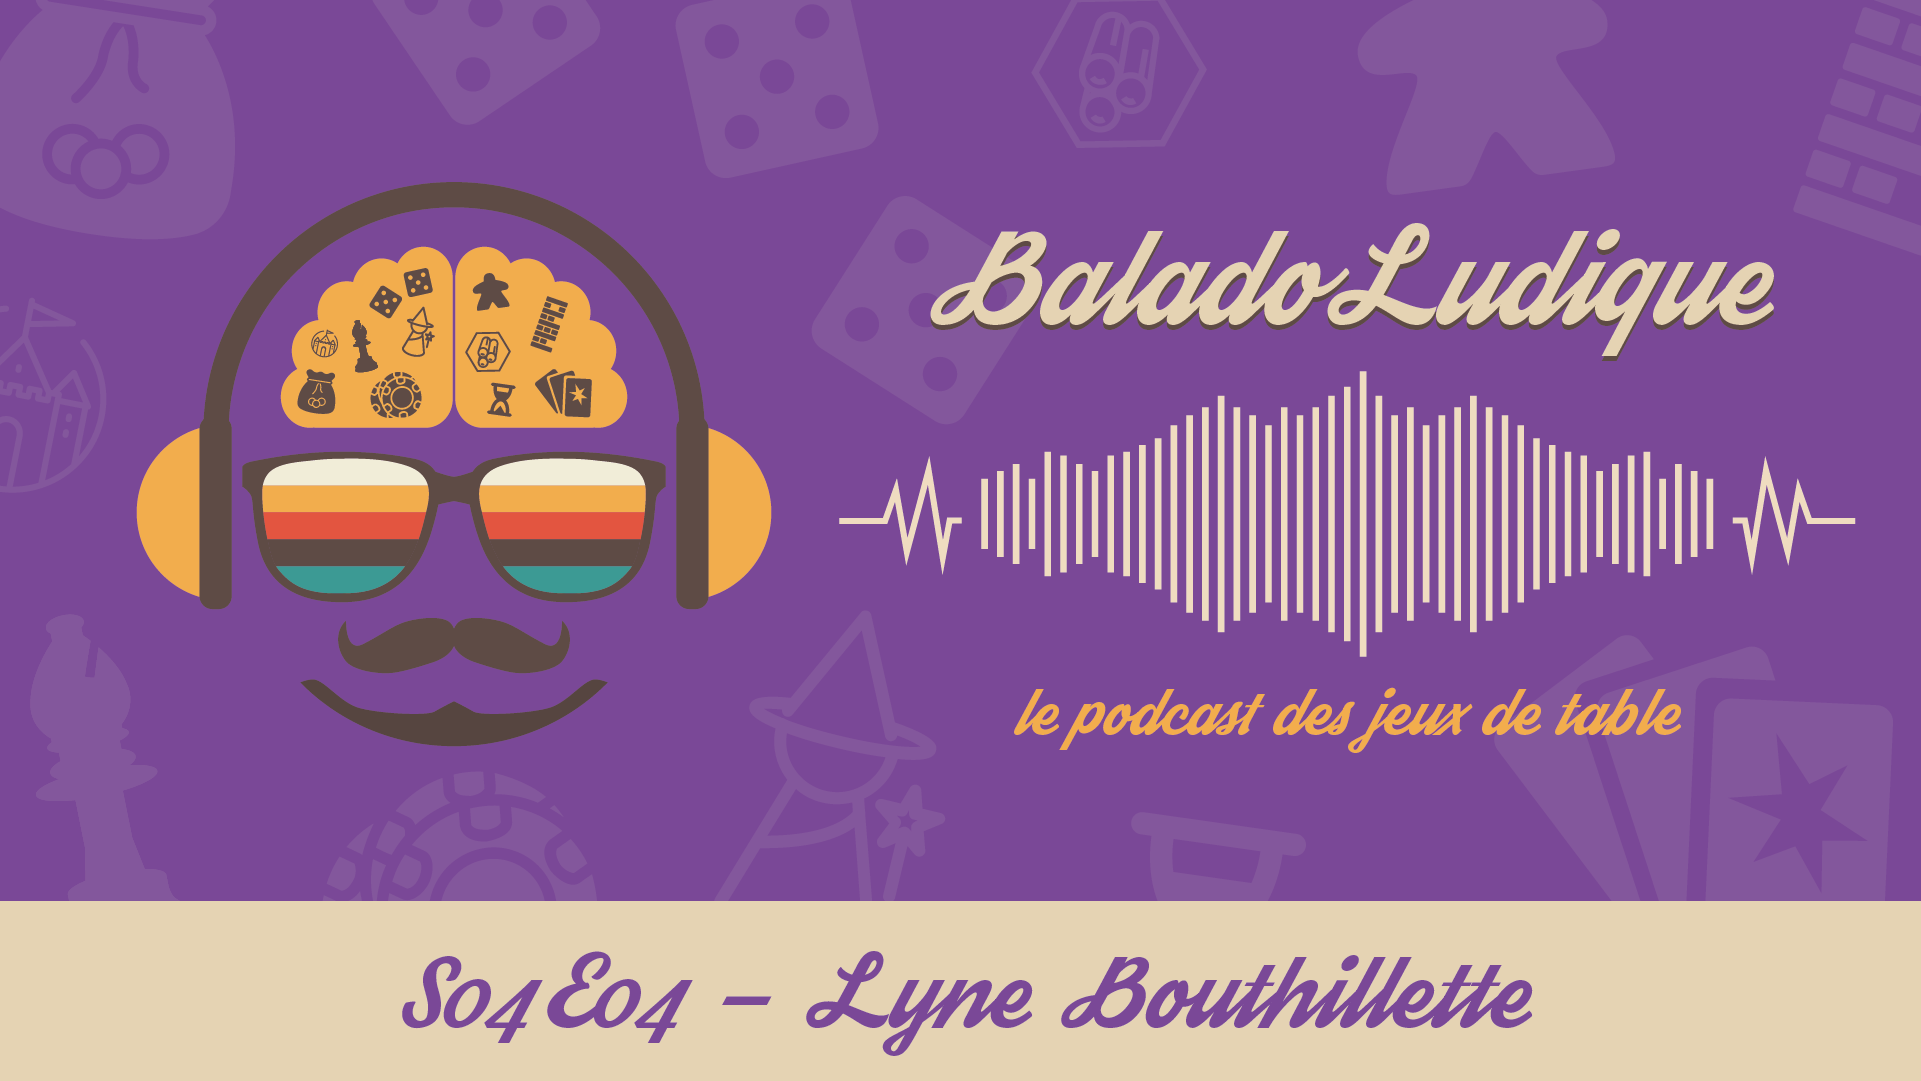 Lyne Bouthillette - BaladoLudique - s04-e04